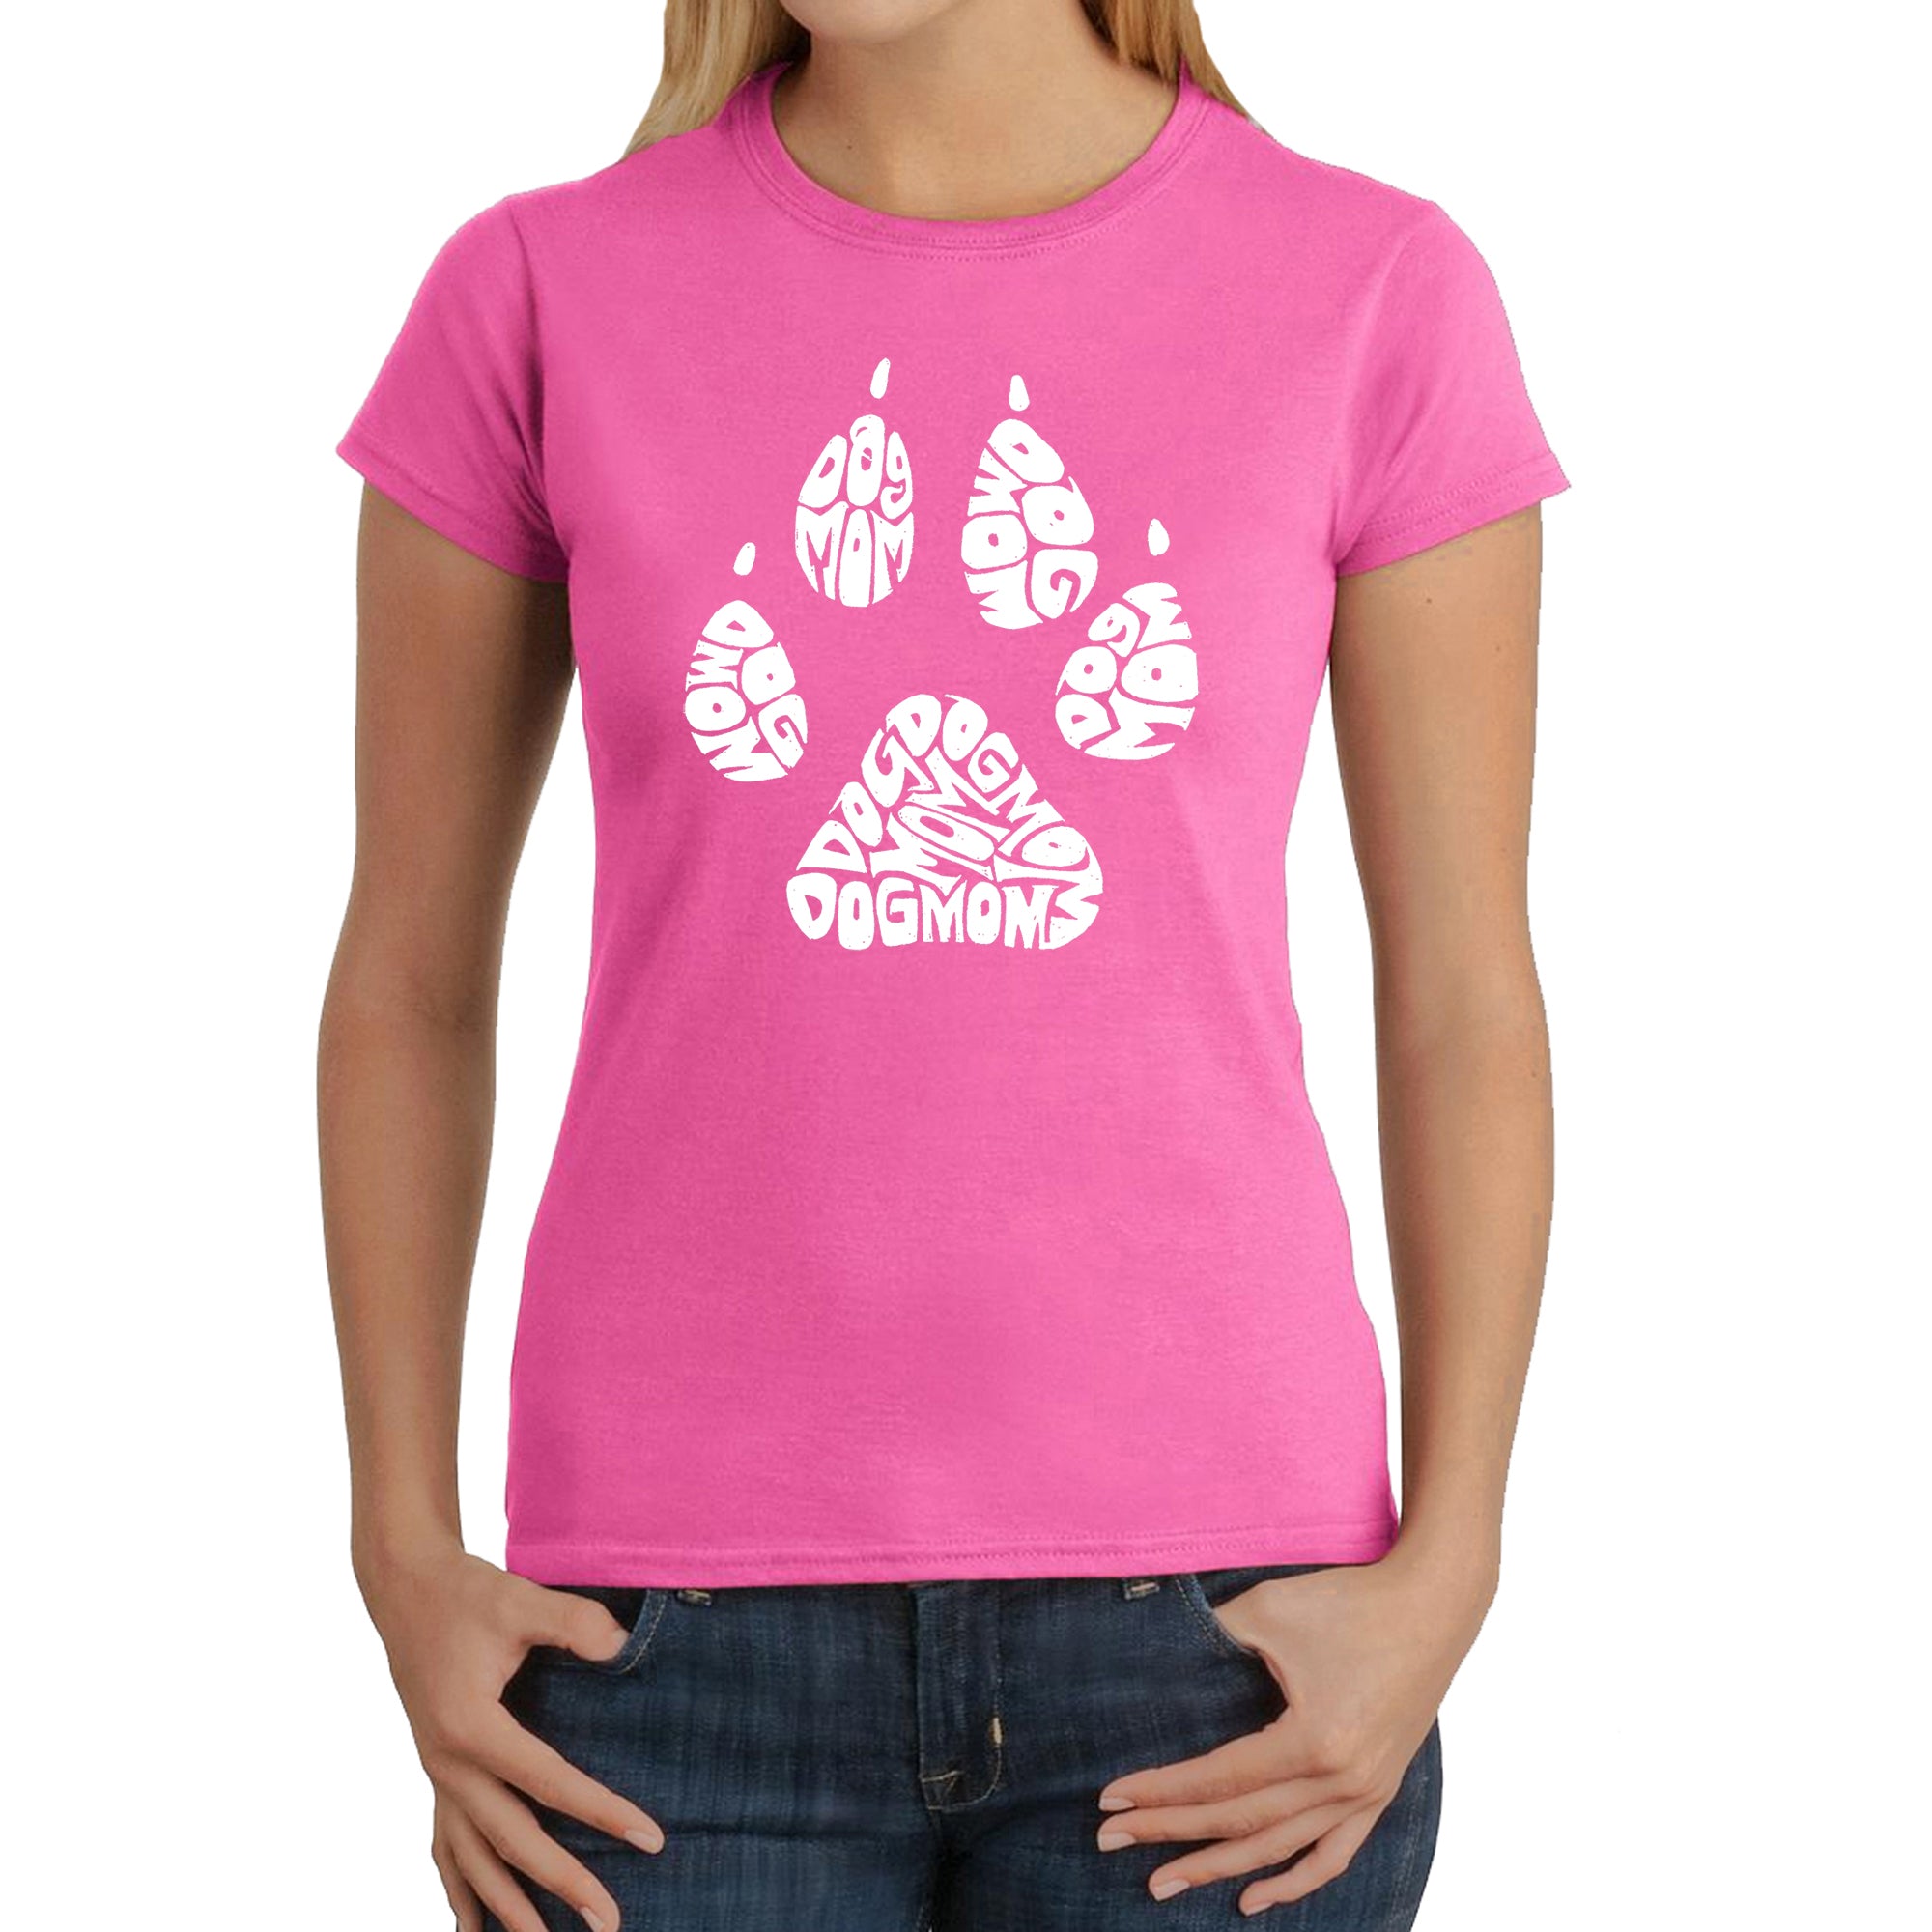 Dog Mom - Women's Word Art T-Shirt - Pink - Small